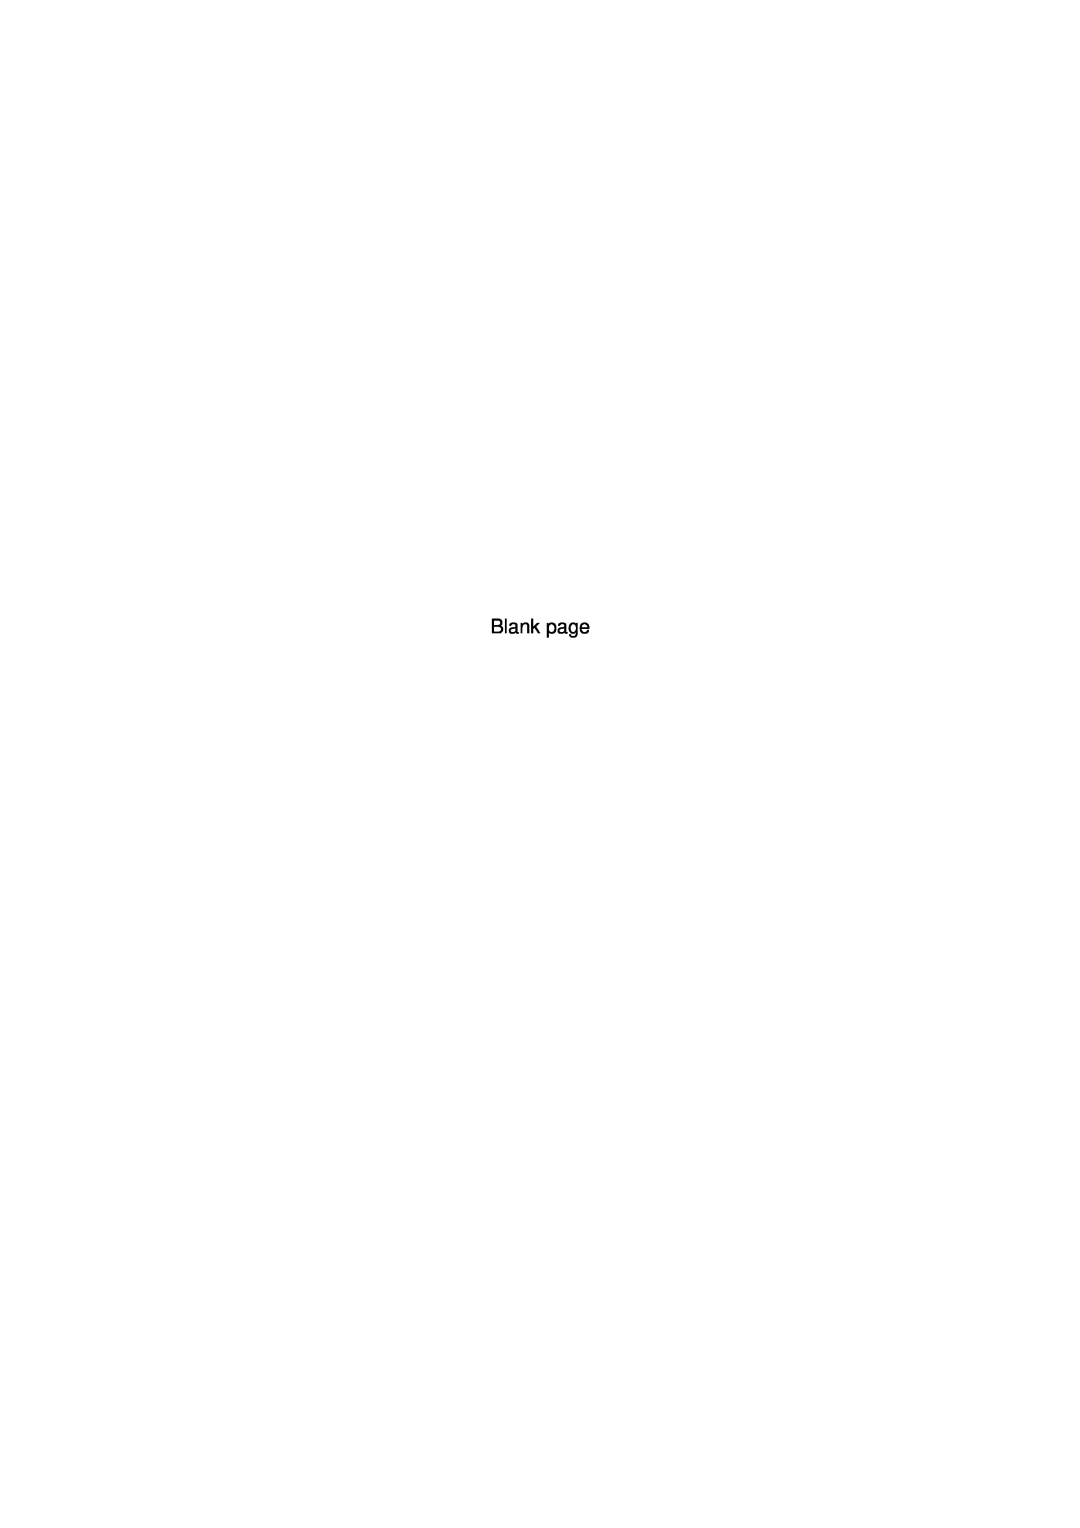 Konica Minolta 752 operation manual Blank page 